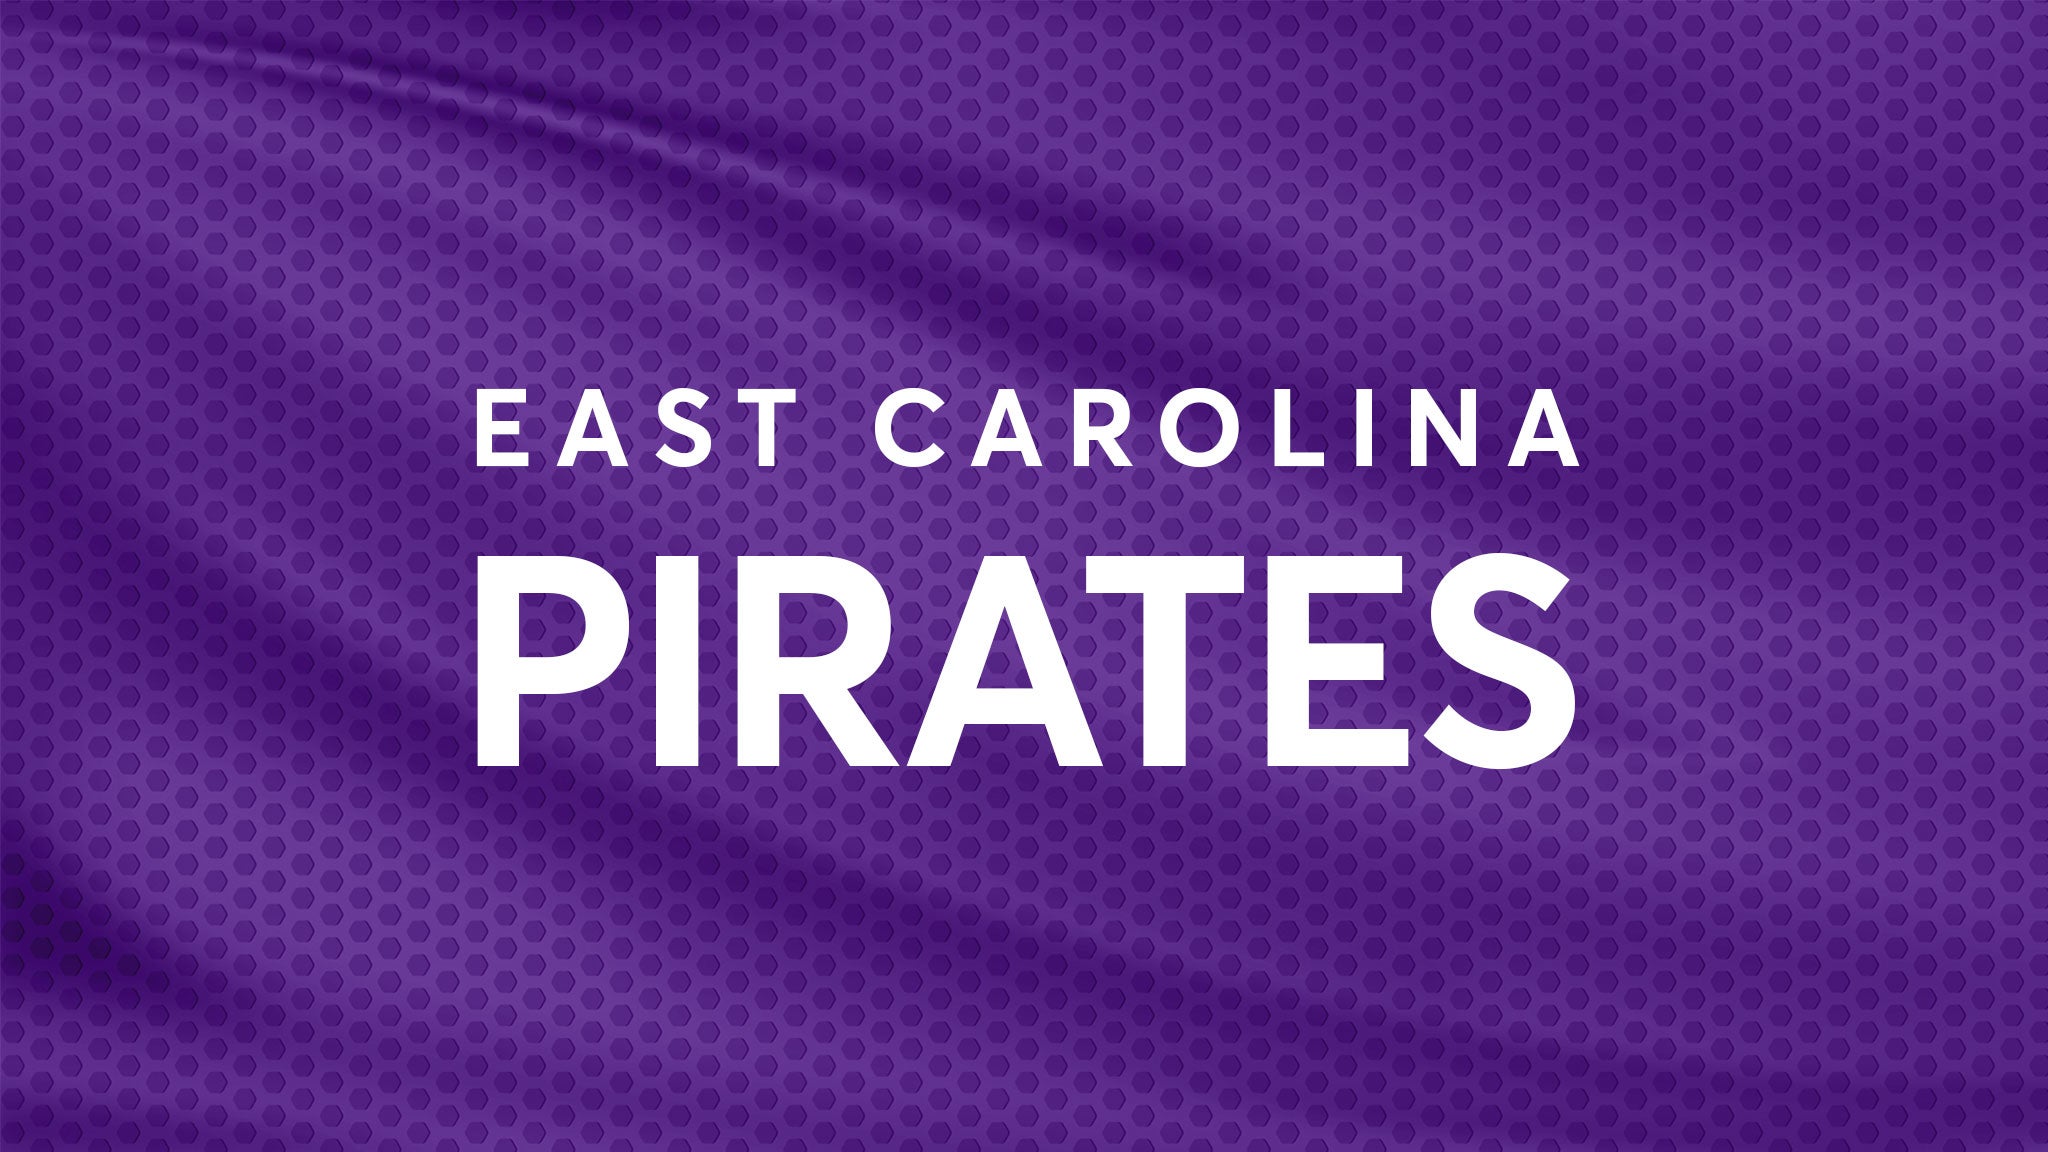 East Carolina Pirates Football vs. Temple Owls Football hero